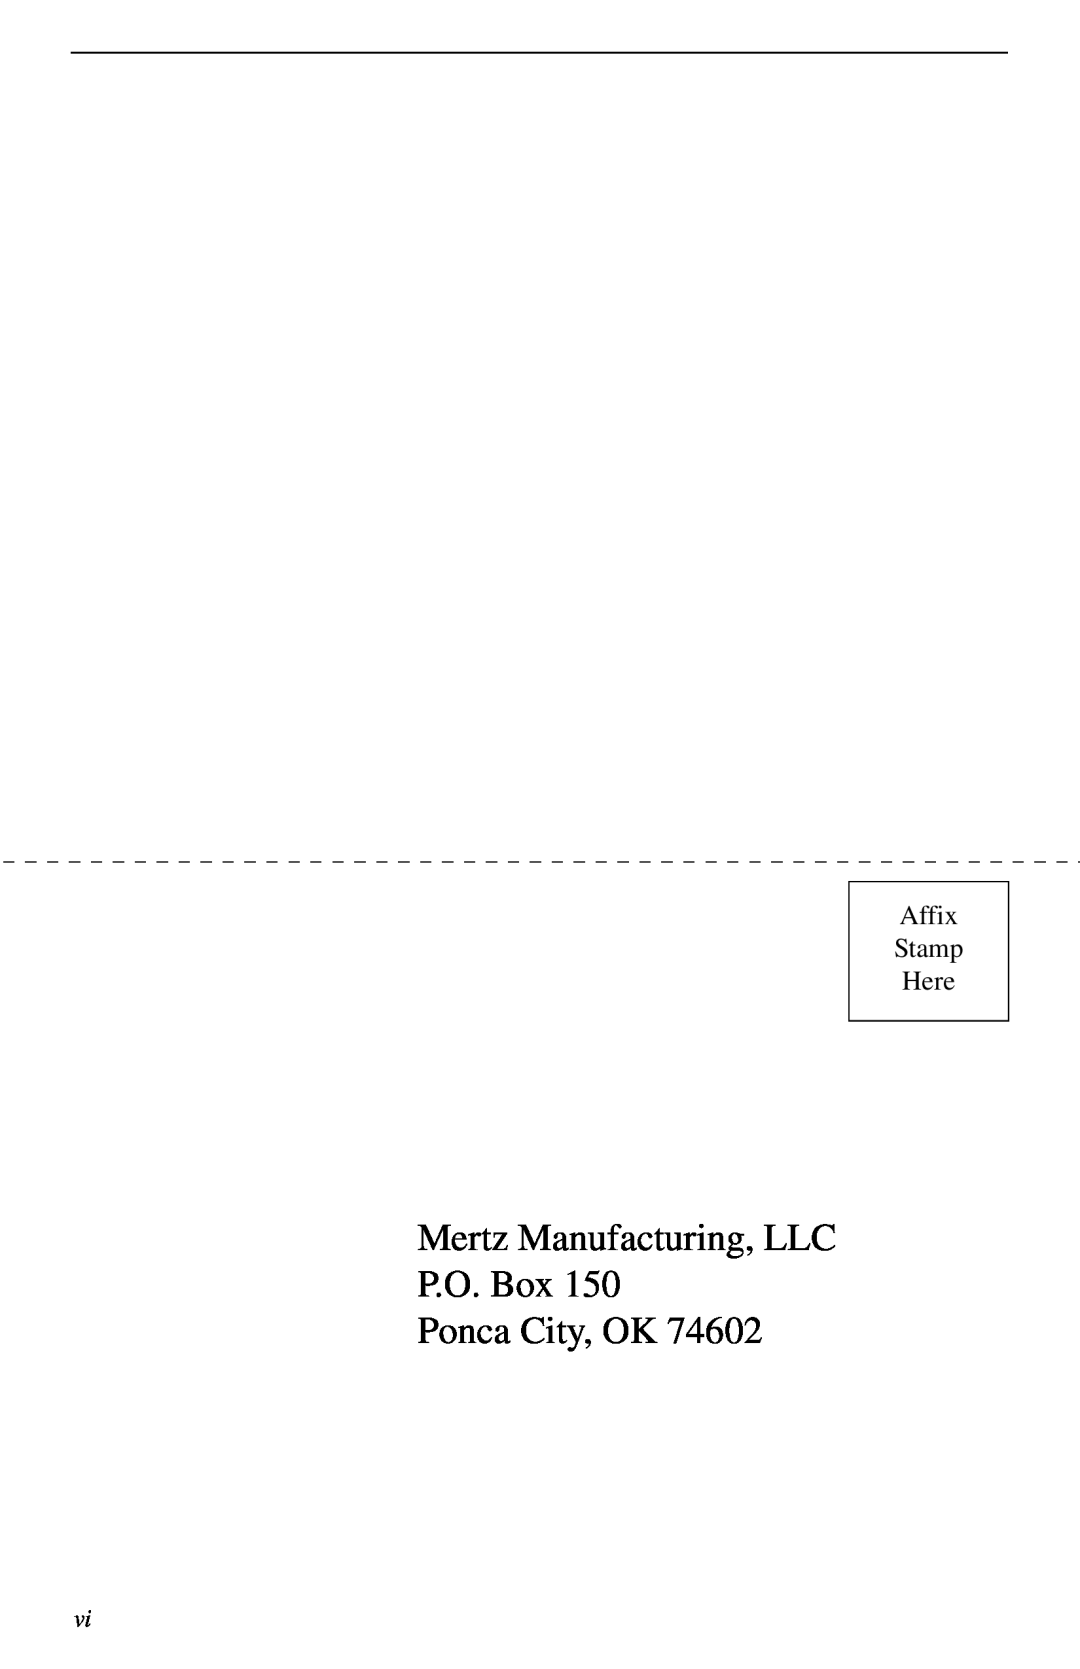 Cellboost 999-823 manual Mertz Manufacturing, LLC P.O. Box Ponca City, OK, Affix Stamp Here 